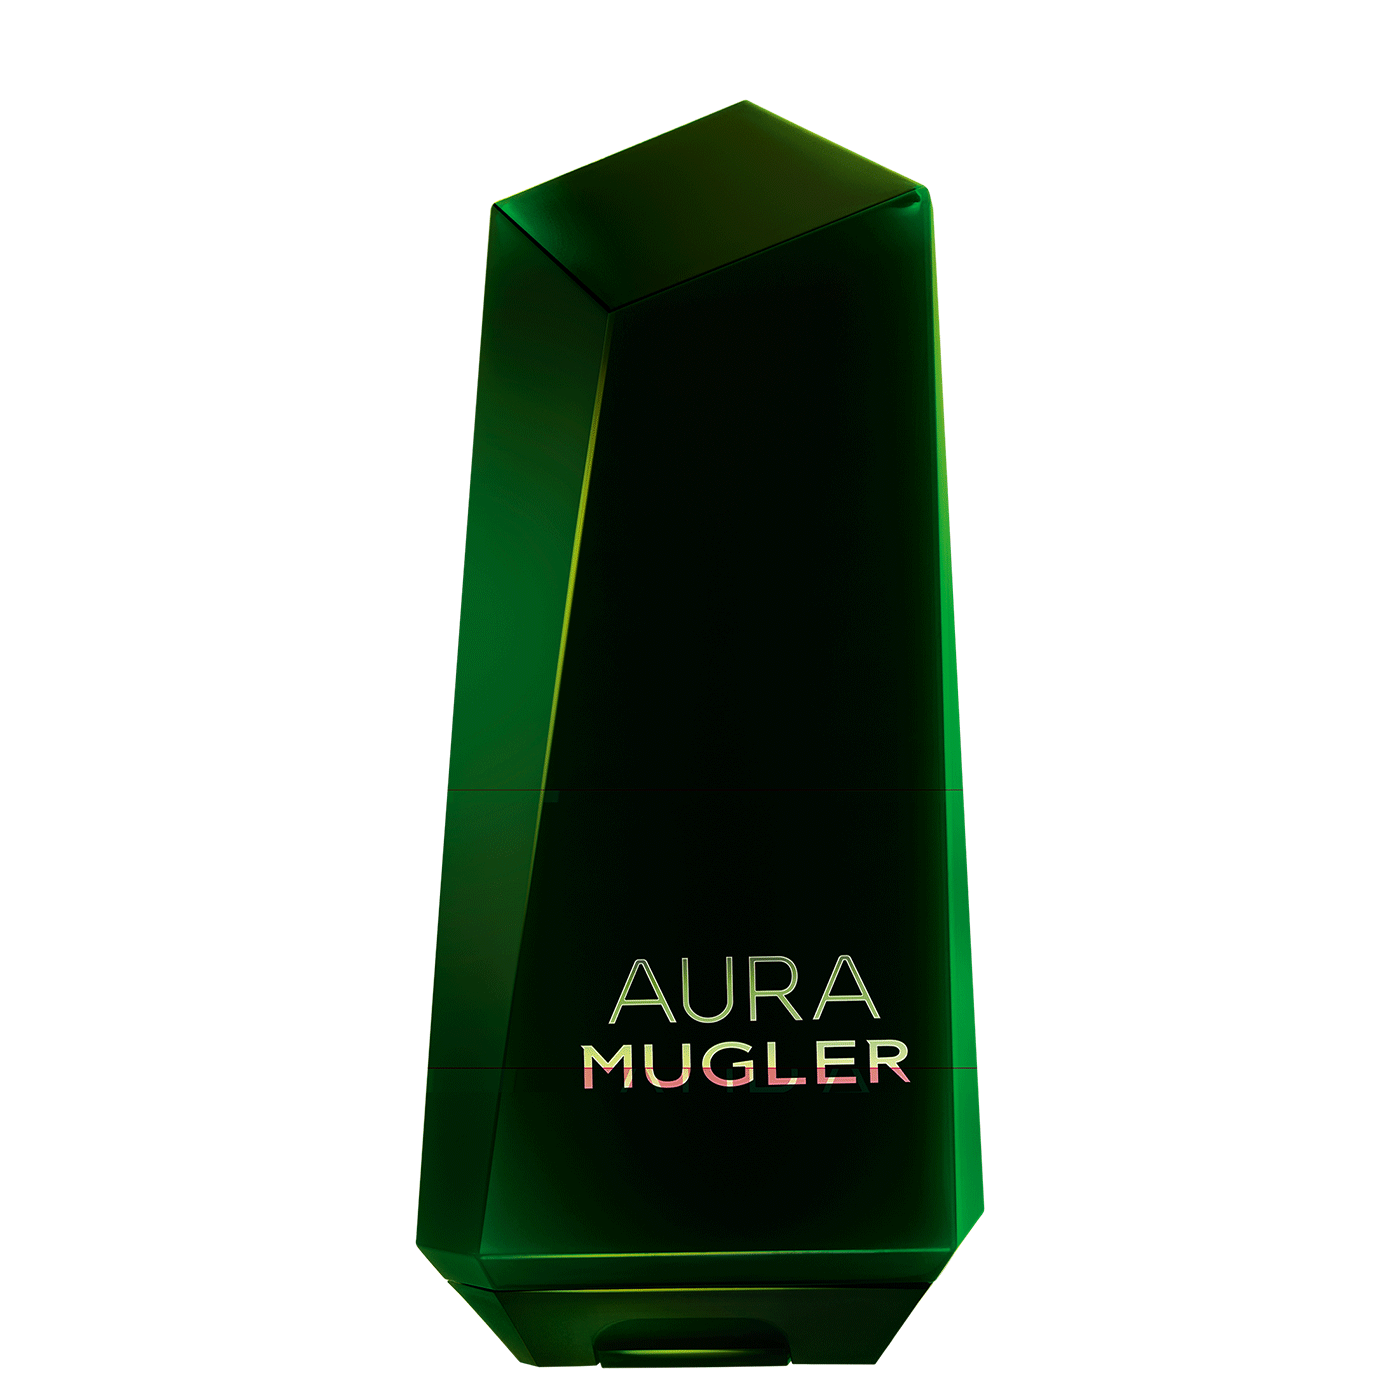 Aura Body Lotion by Thierry Mugler 200ml